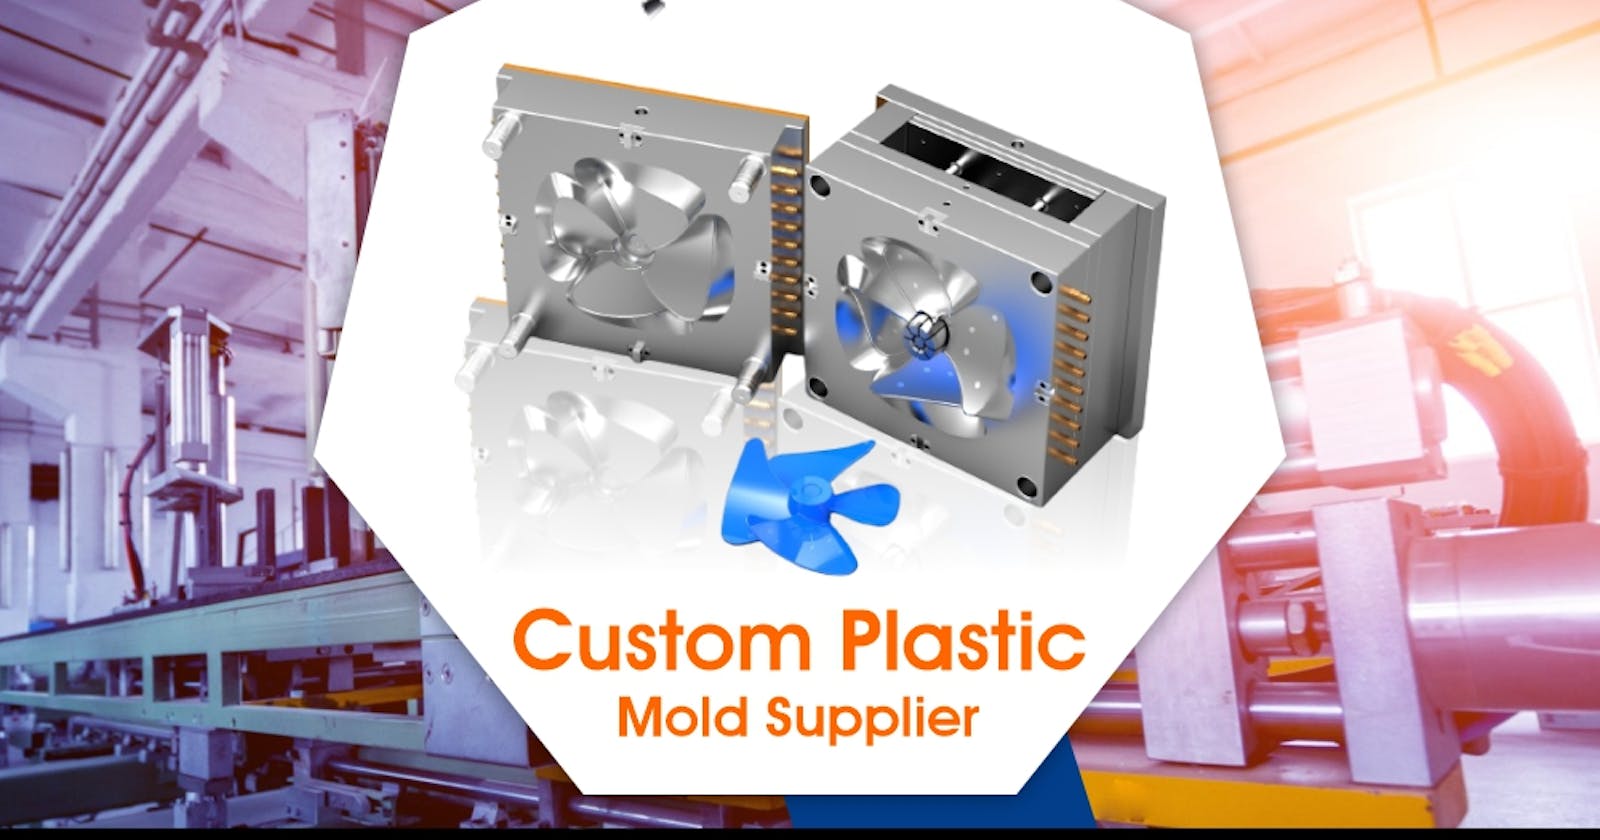 Professional Custom Plastic Mold Supplier in Industry